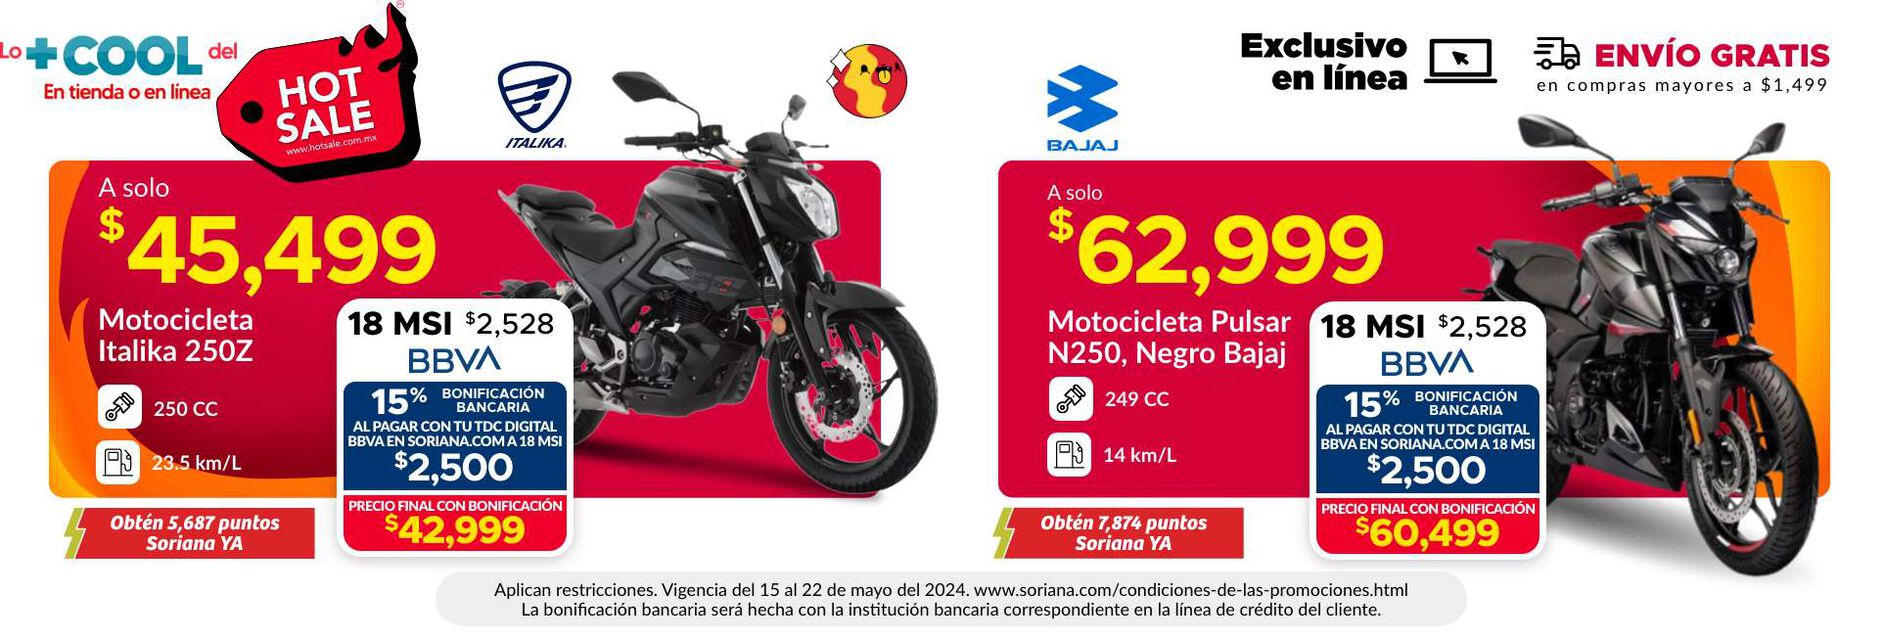 Motocicleta Italika 250Z a sólo $45,499